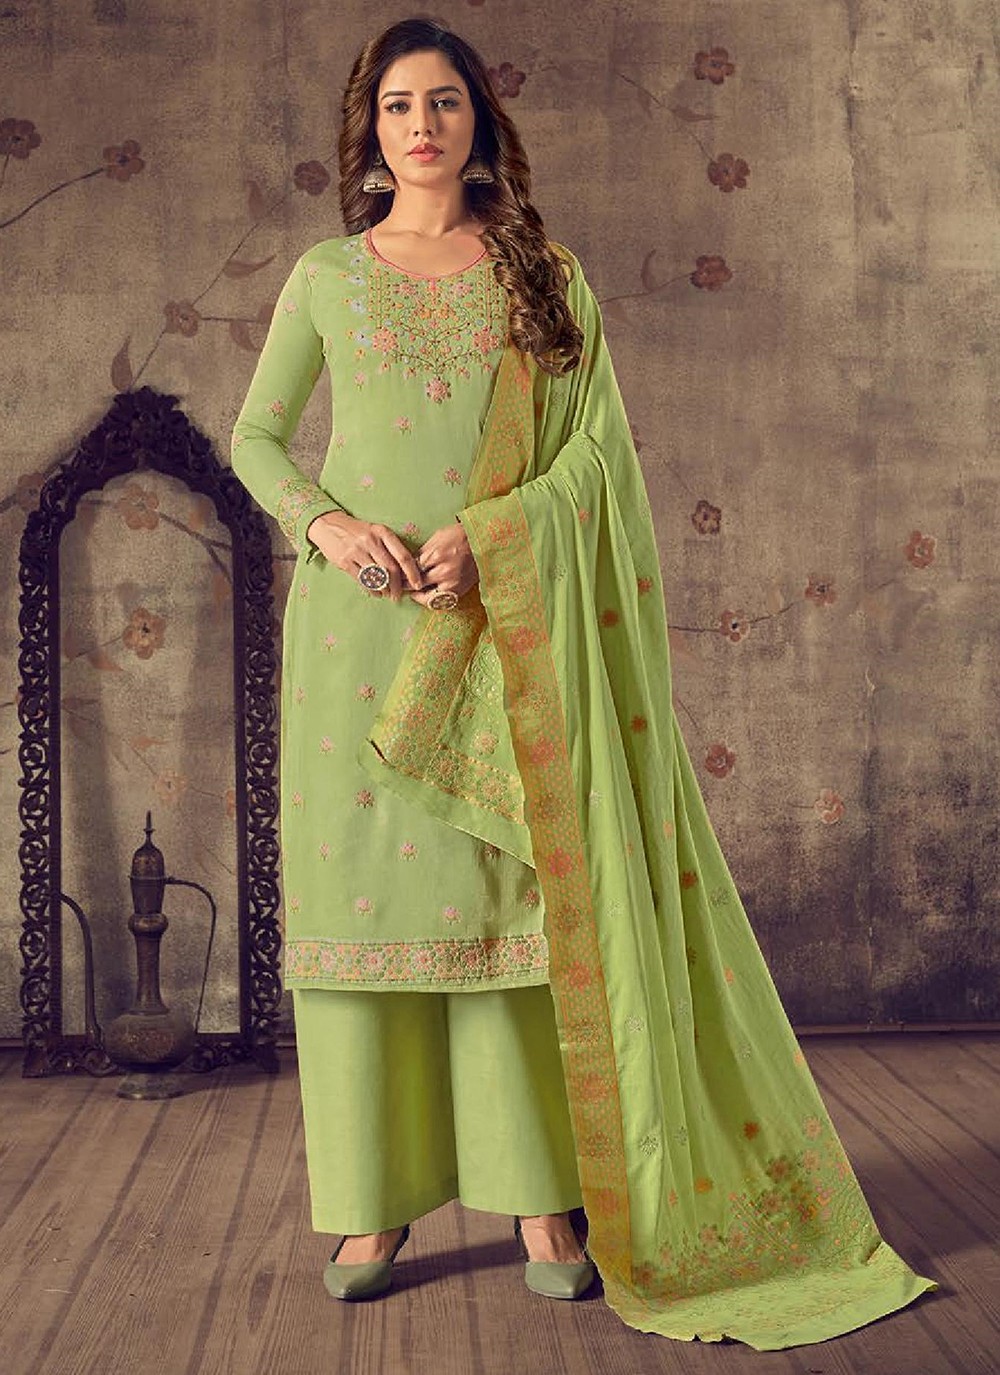 Cotton Green Designer Pakistani Suit